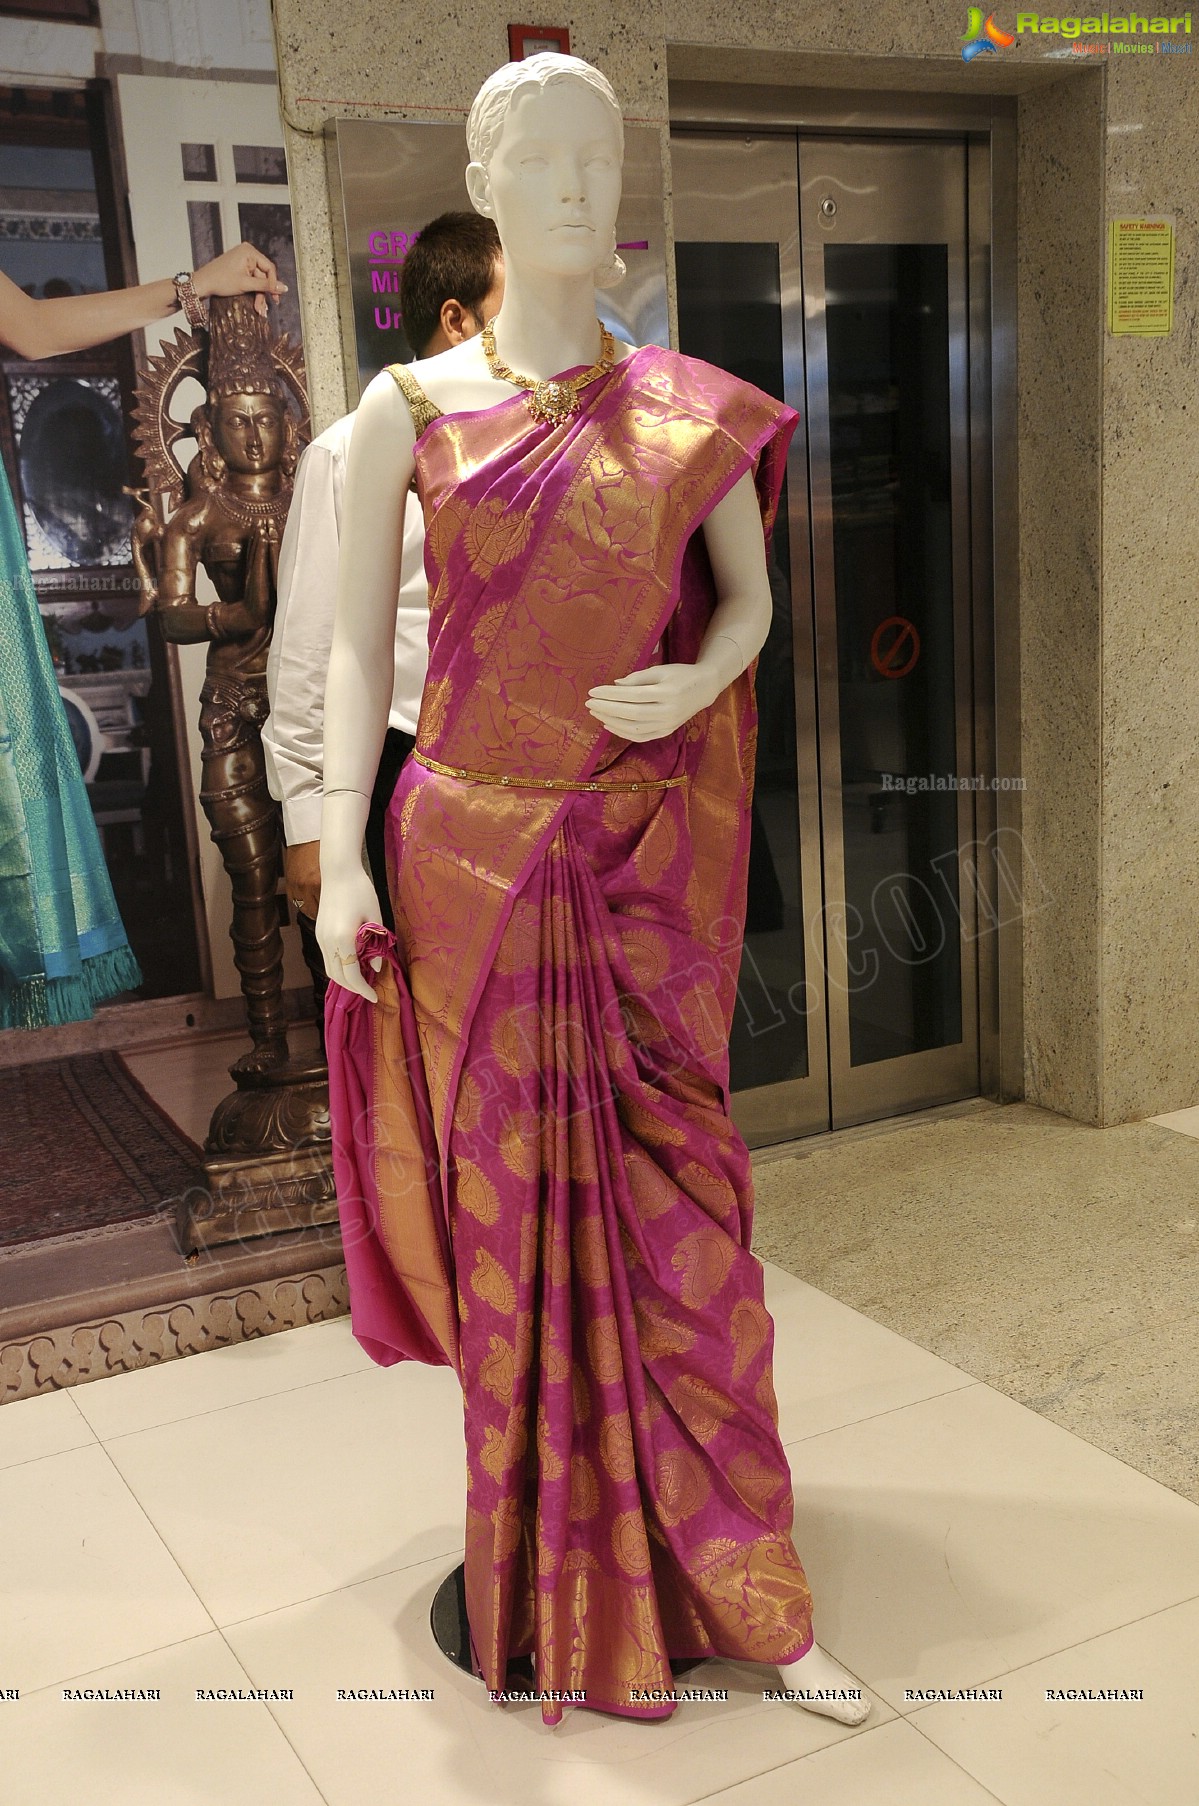 Neeru's Summer Collection 2012 Launch